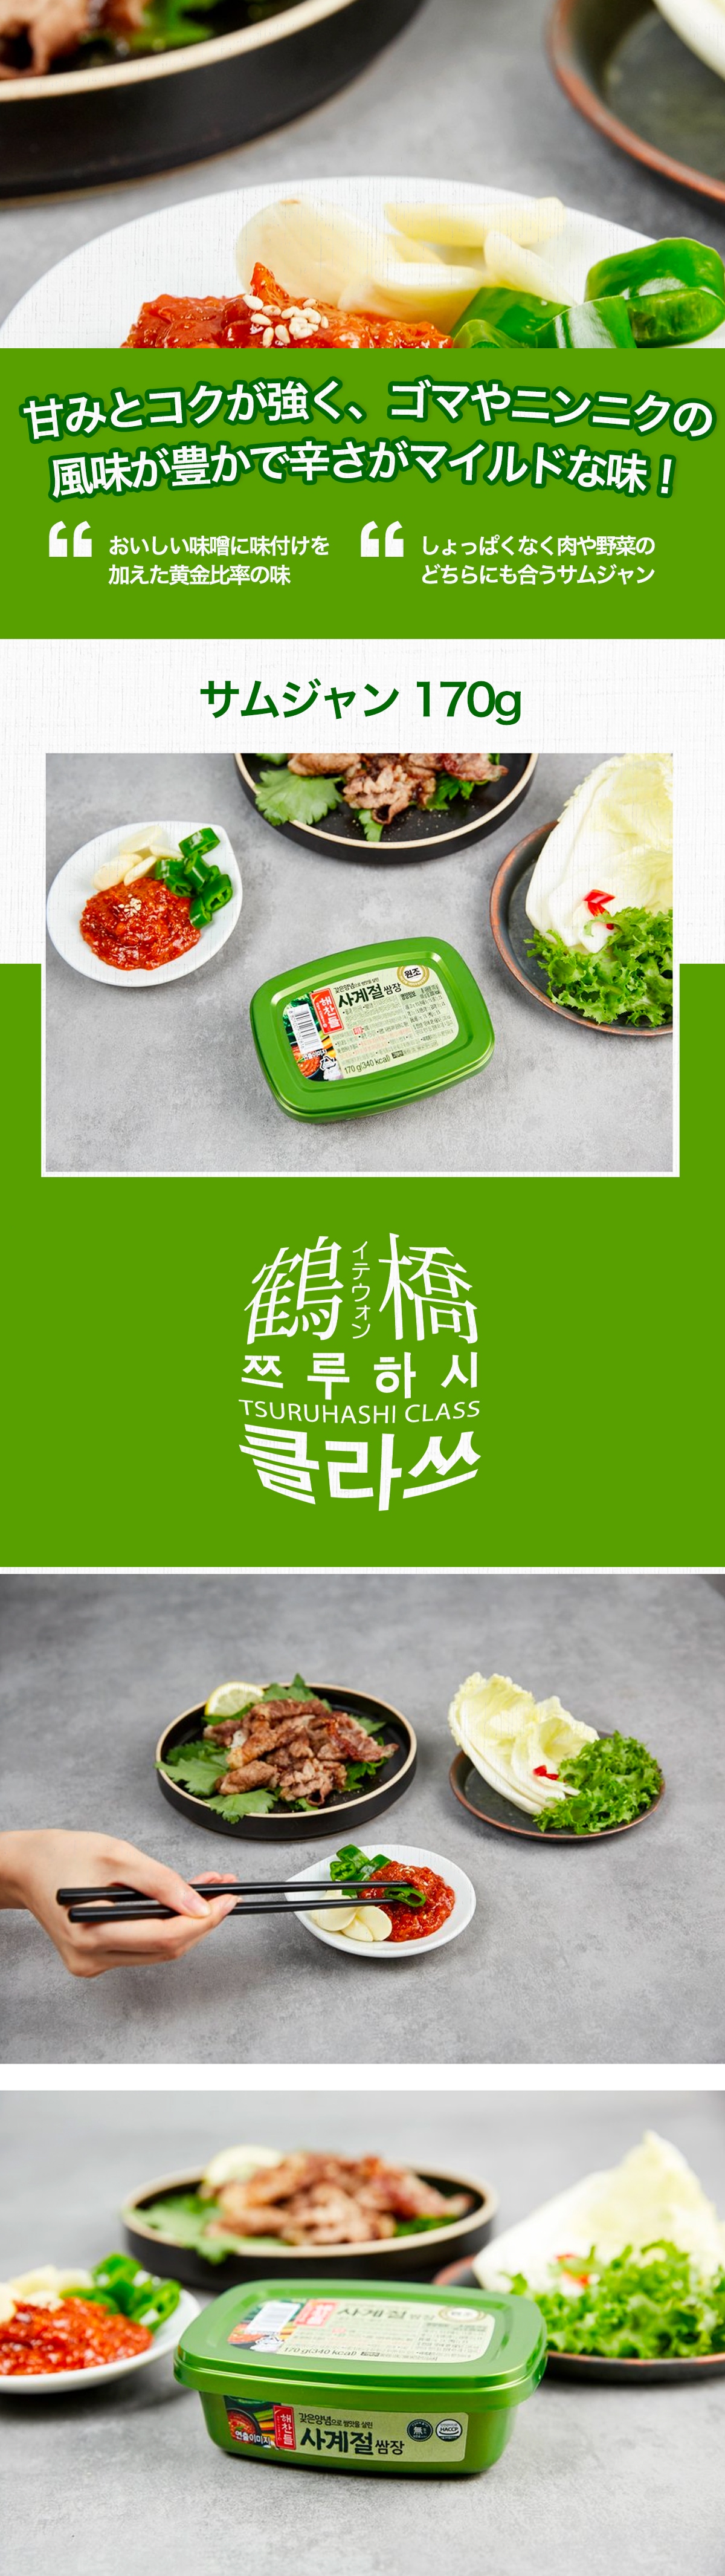 CJジャパン bibigo サムジャン 170g 韓国食品 調味料 韓国味噌 みそ 正規品